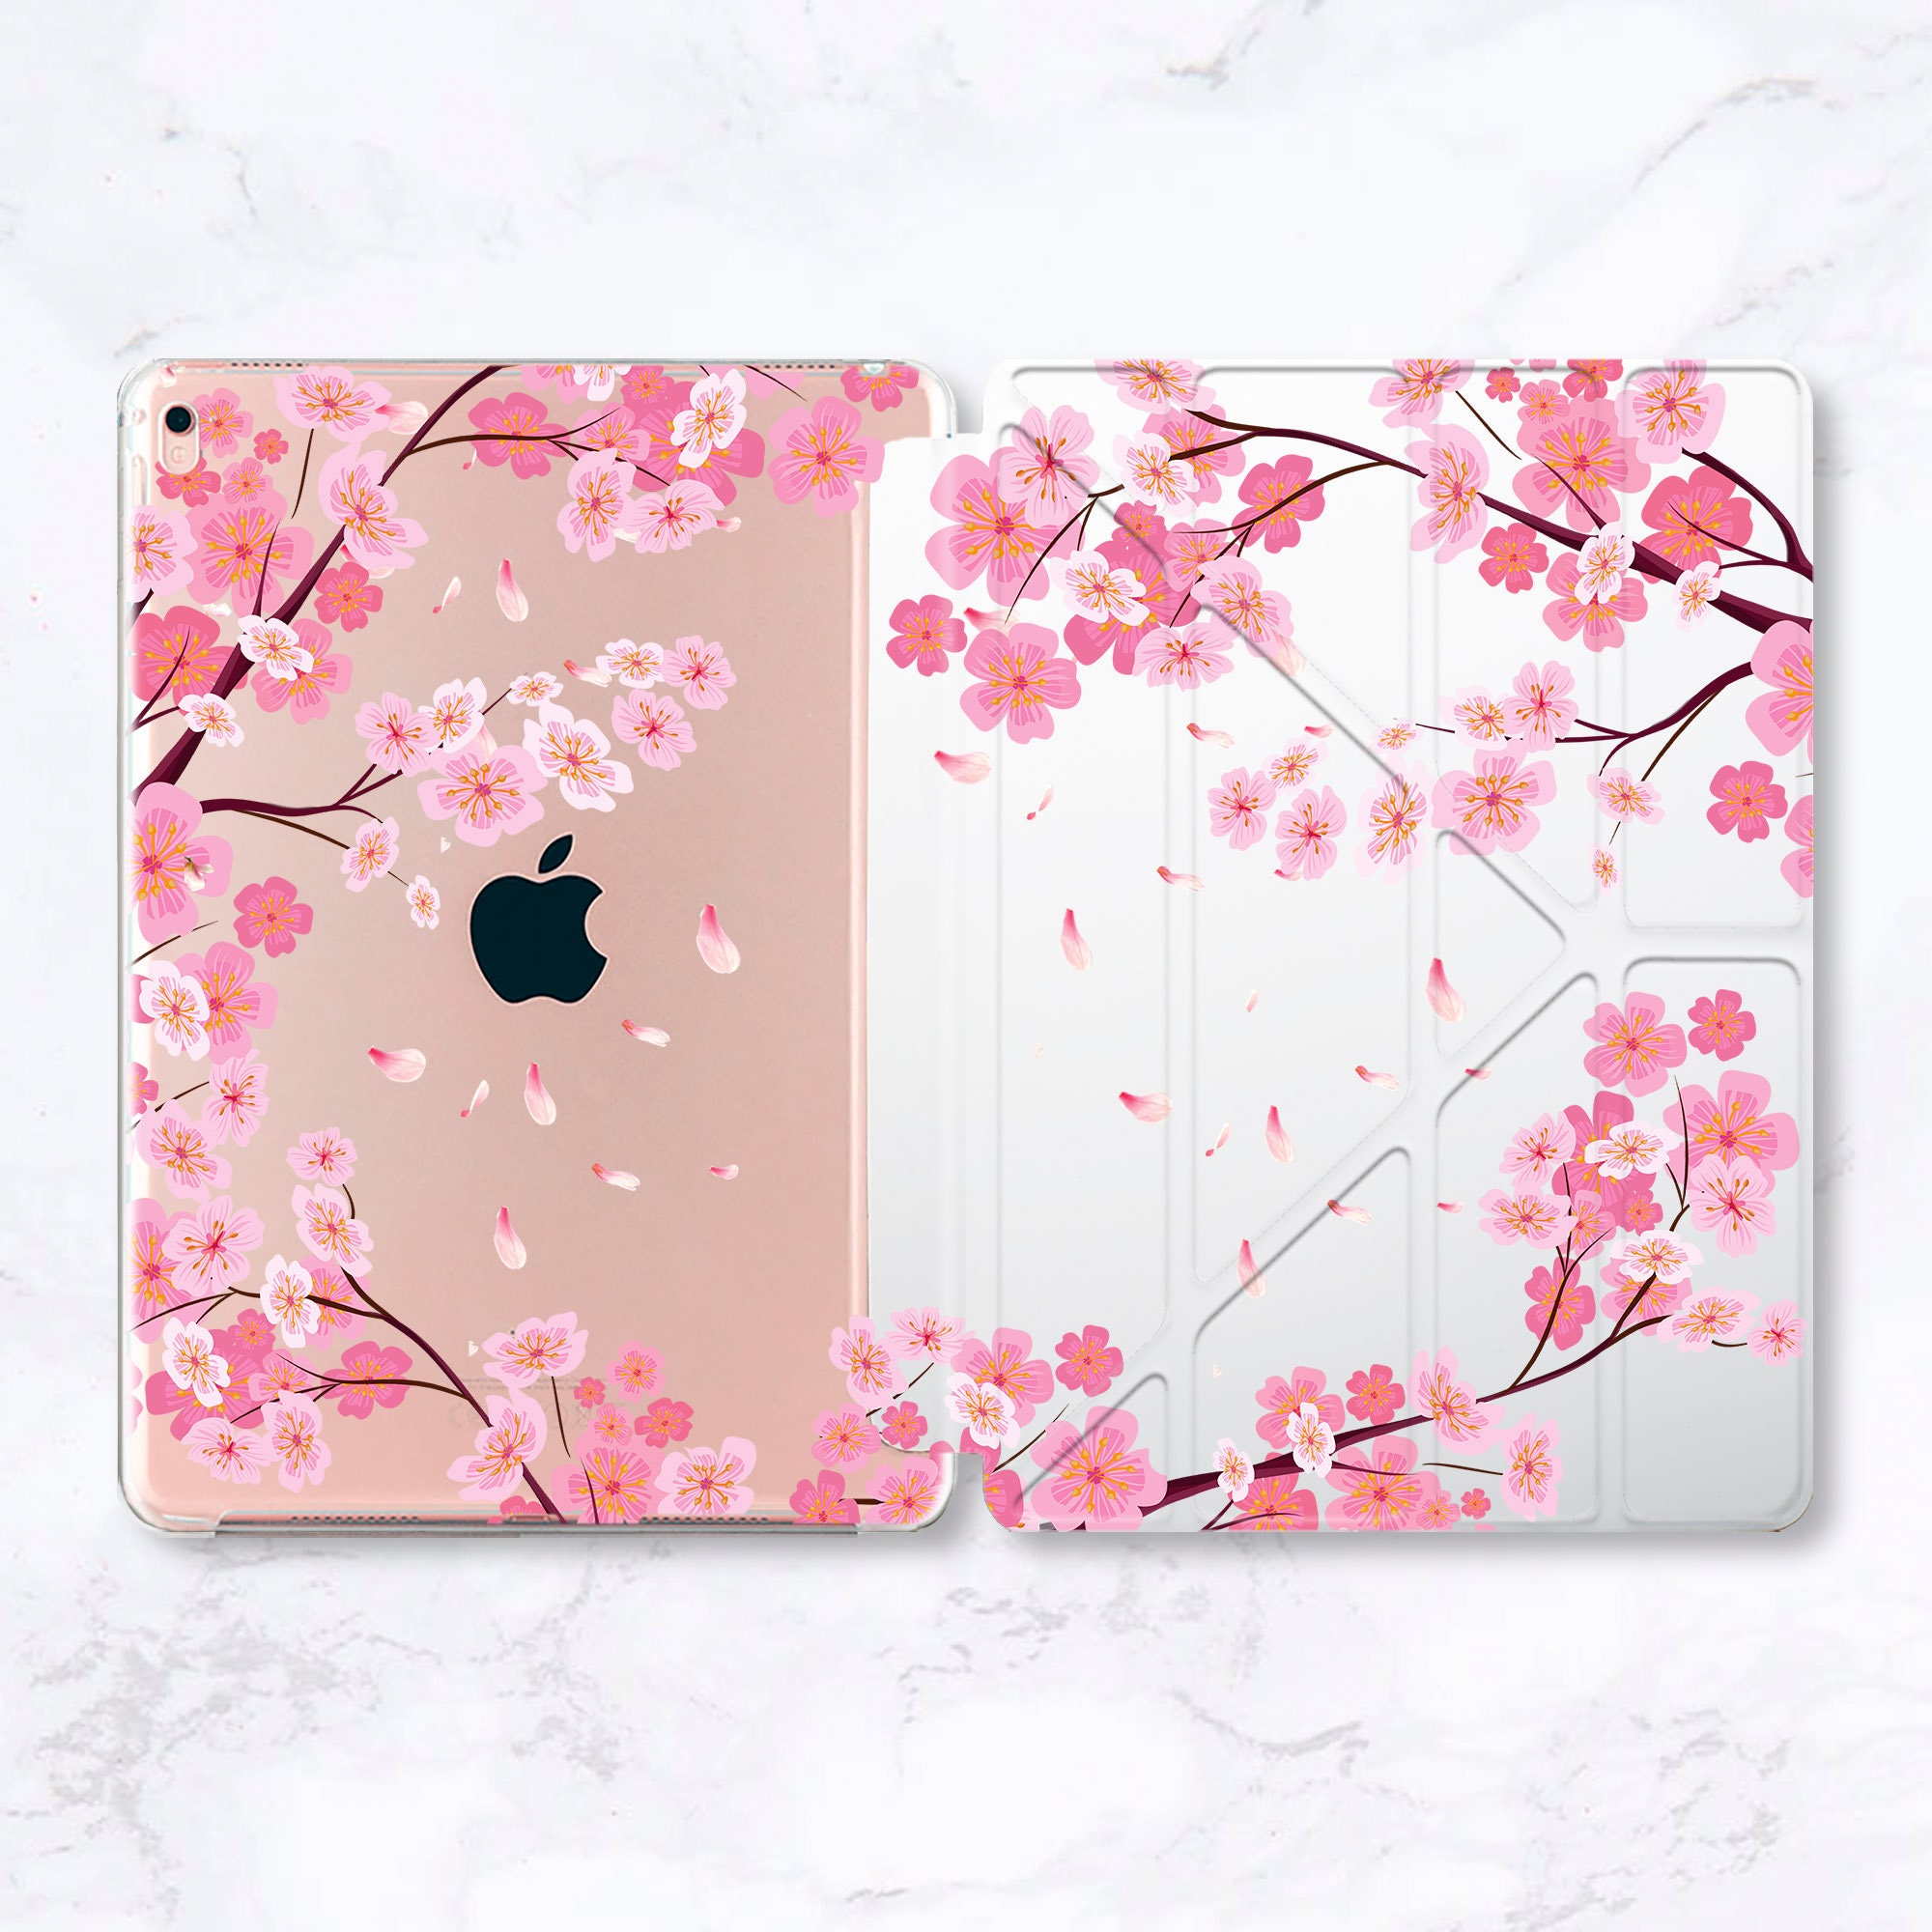 Astrolabium Bij elkaar passen barst Cherry Blossom iPad Case Sakura iPad Air 4 case Roze bloem | Etsy België